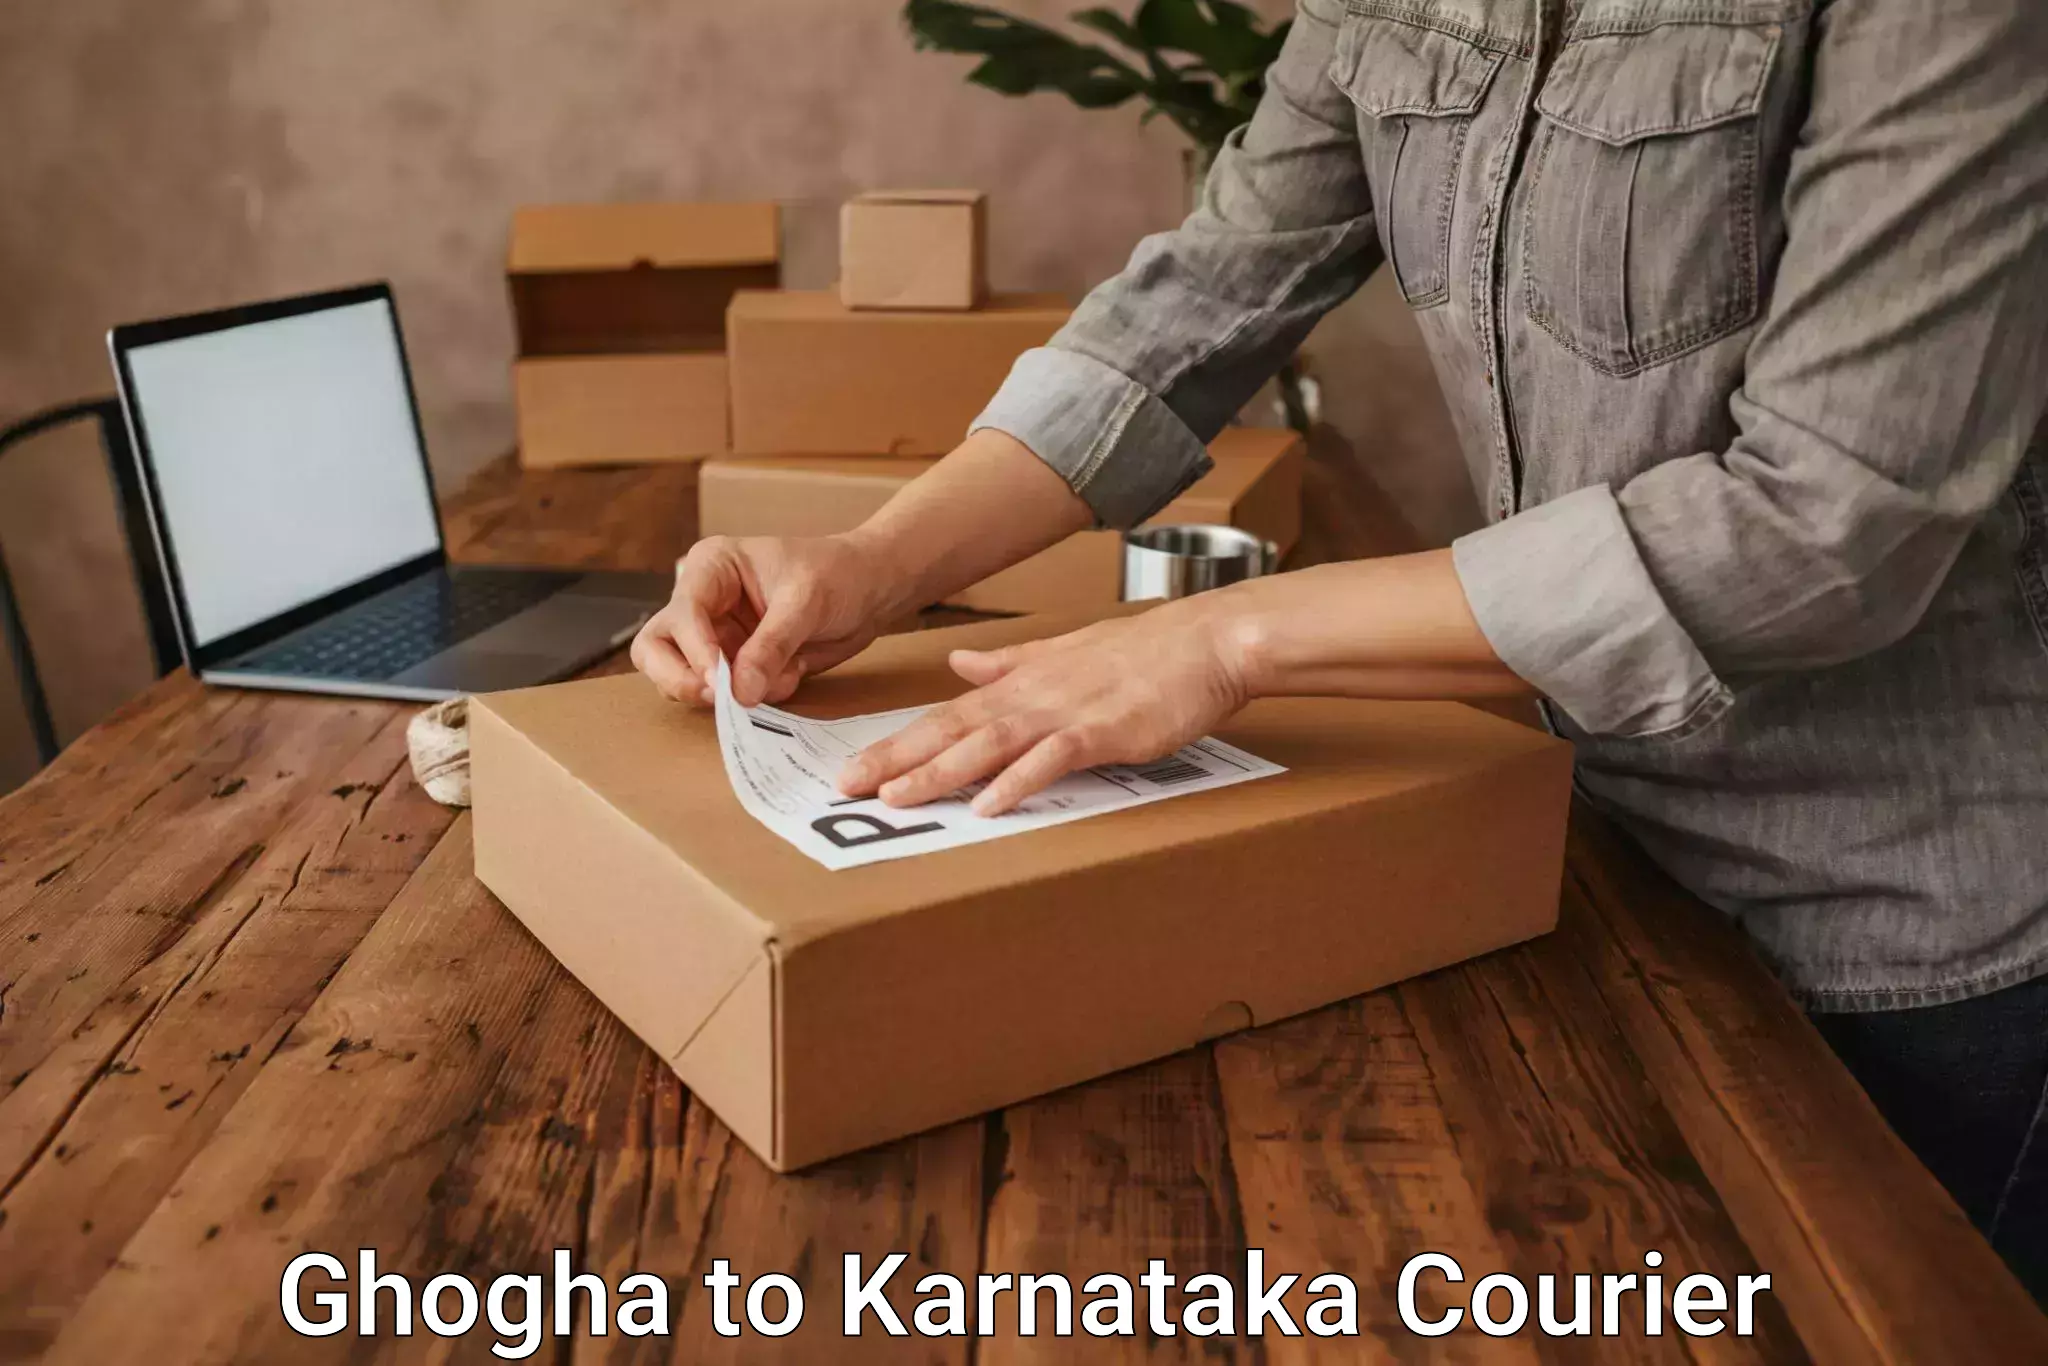 Trusted moving company Ghogha to Karnataka